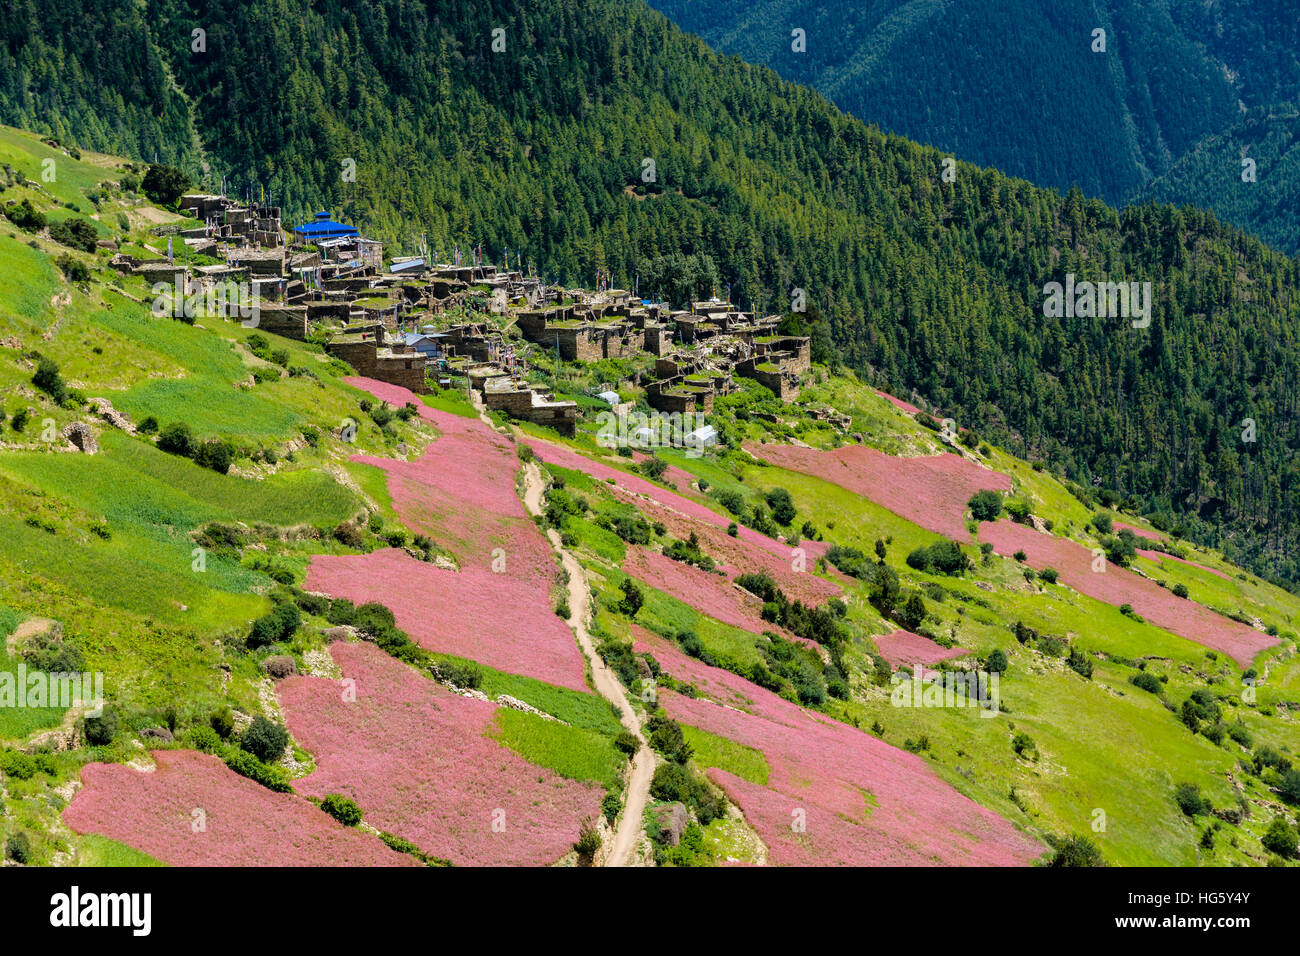 Paysage agricole avec des champs de sarrasin rose blossom, Upper Marsyangdi valley, District de Manang, Ghyaru, Népal Banque D'Images